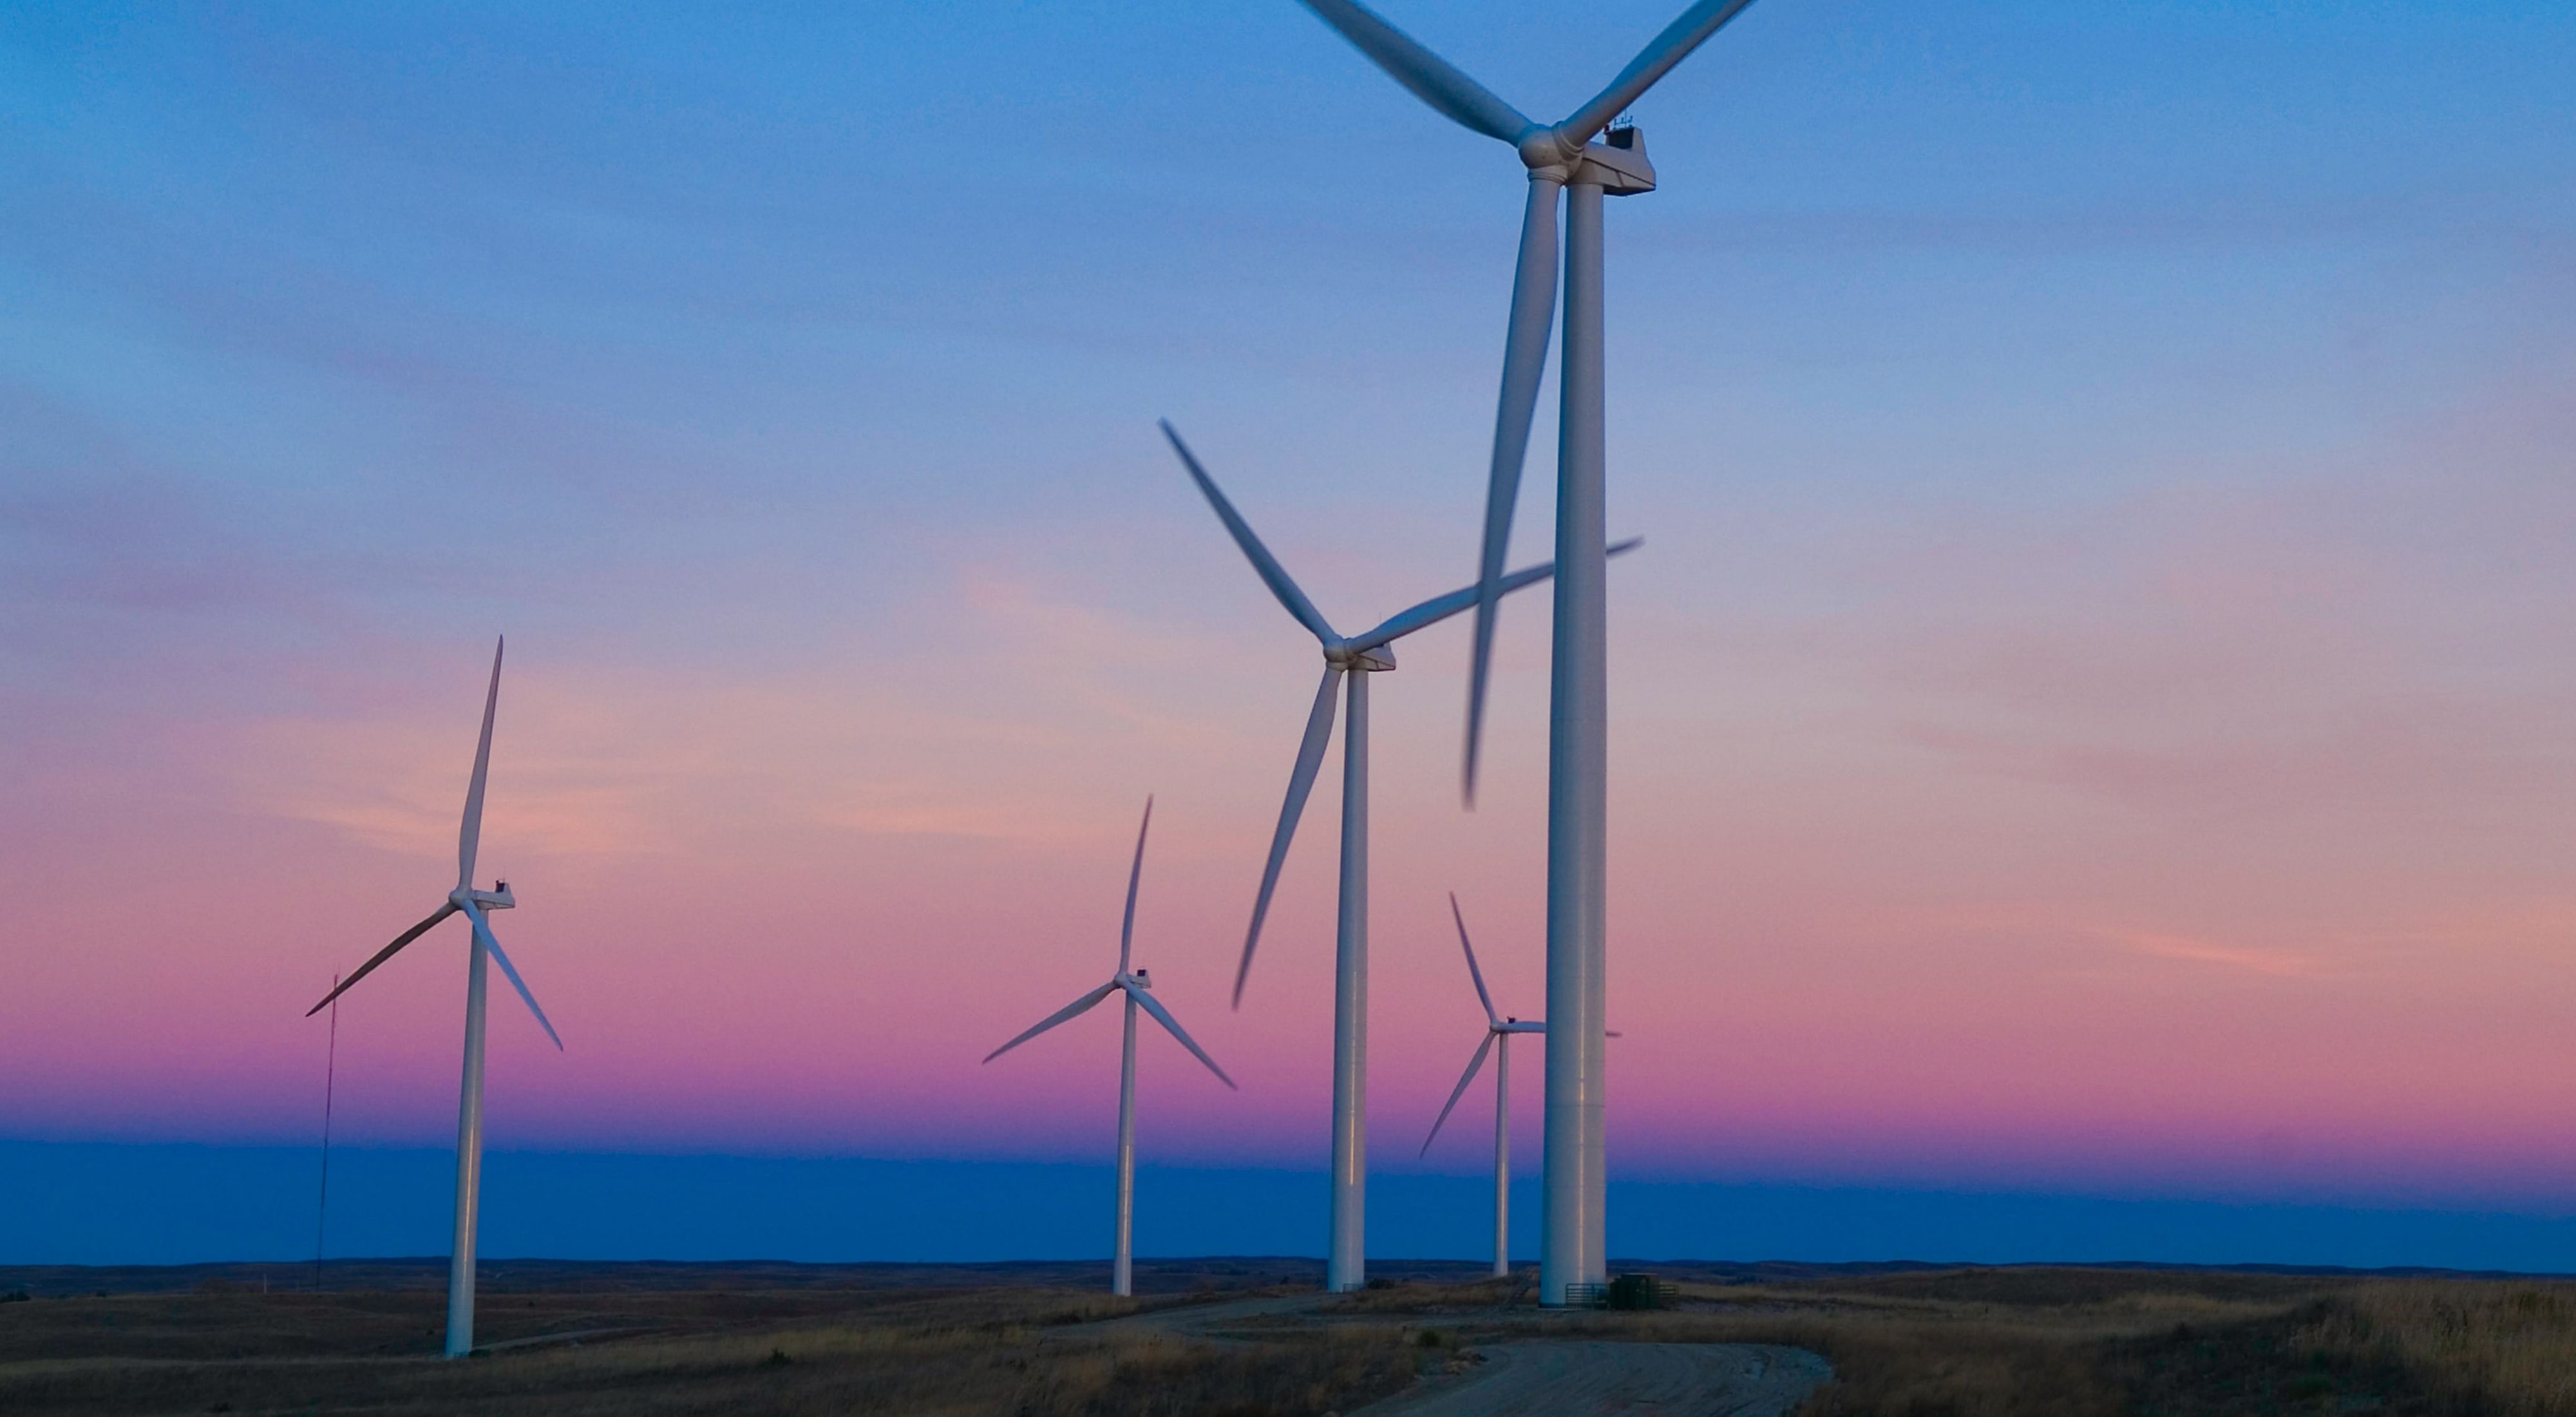 A field of wind turbines at dusk